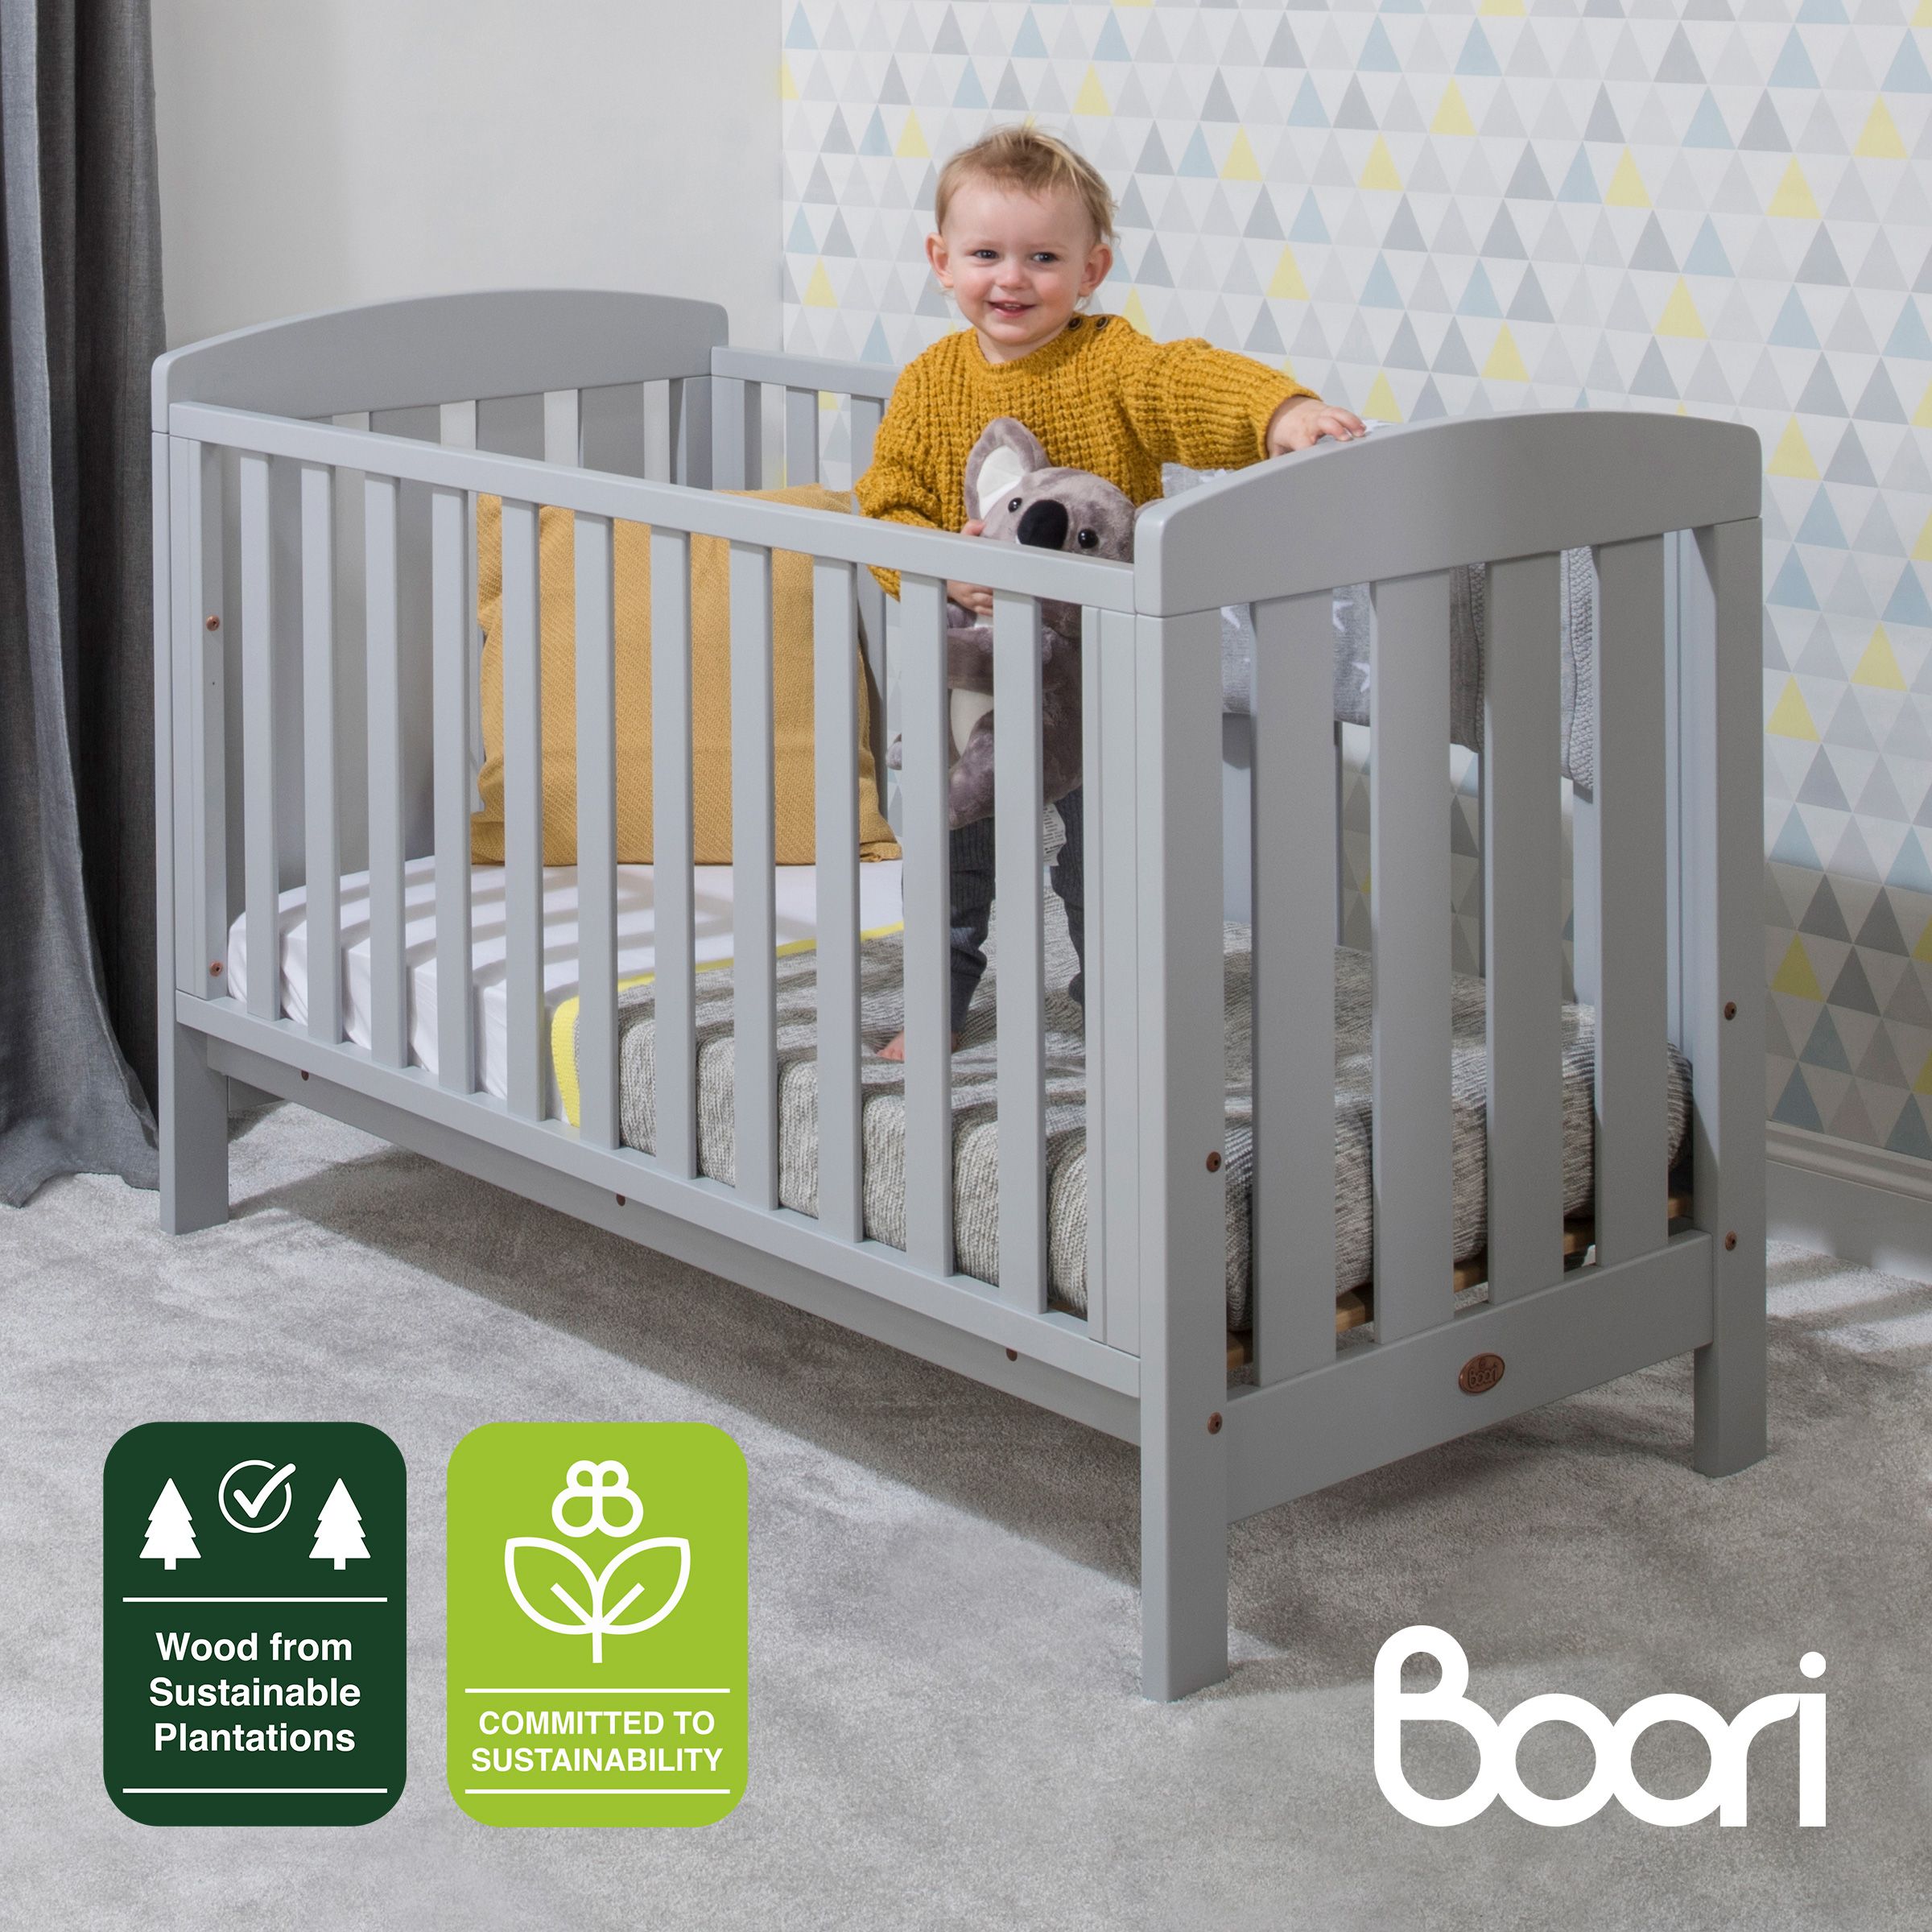 Nursery furniture from award-winning brand, Boori